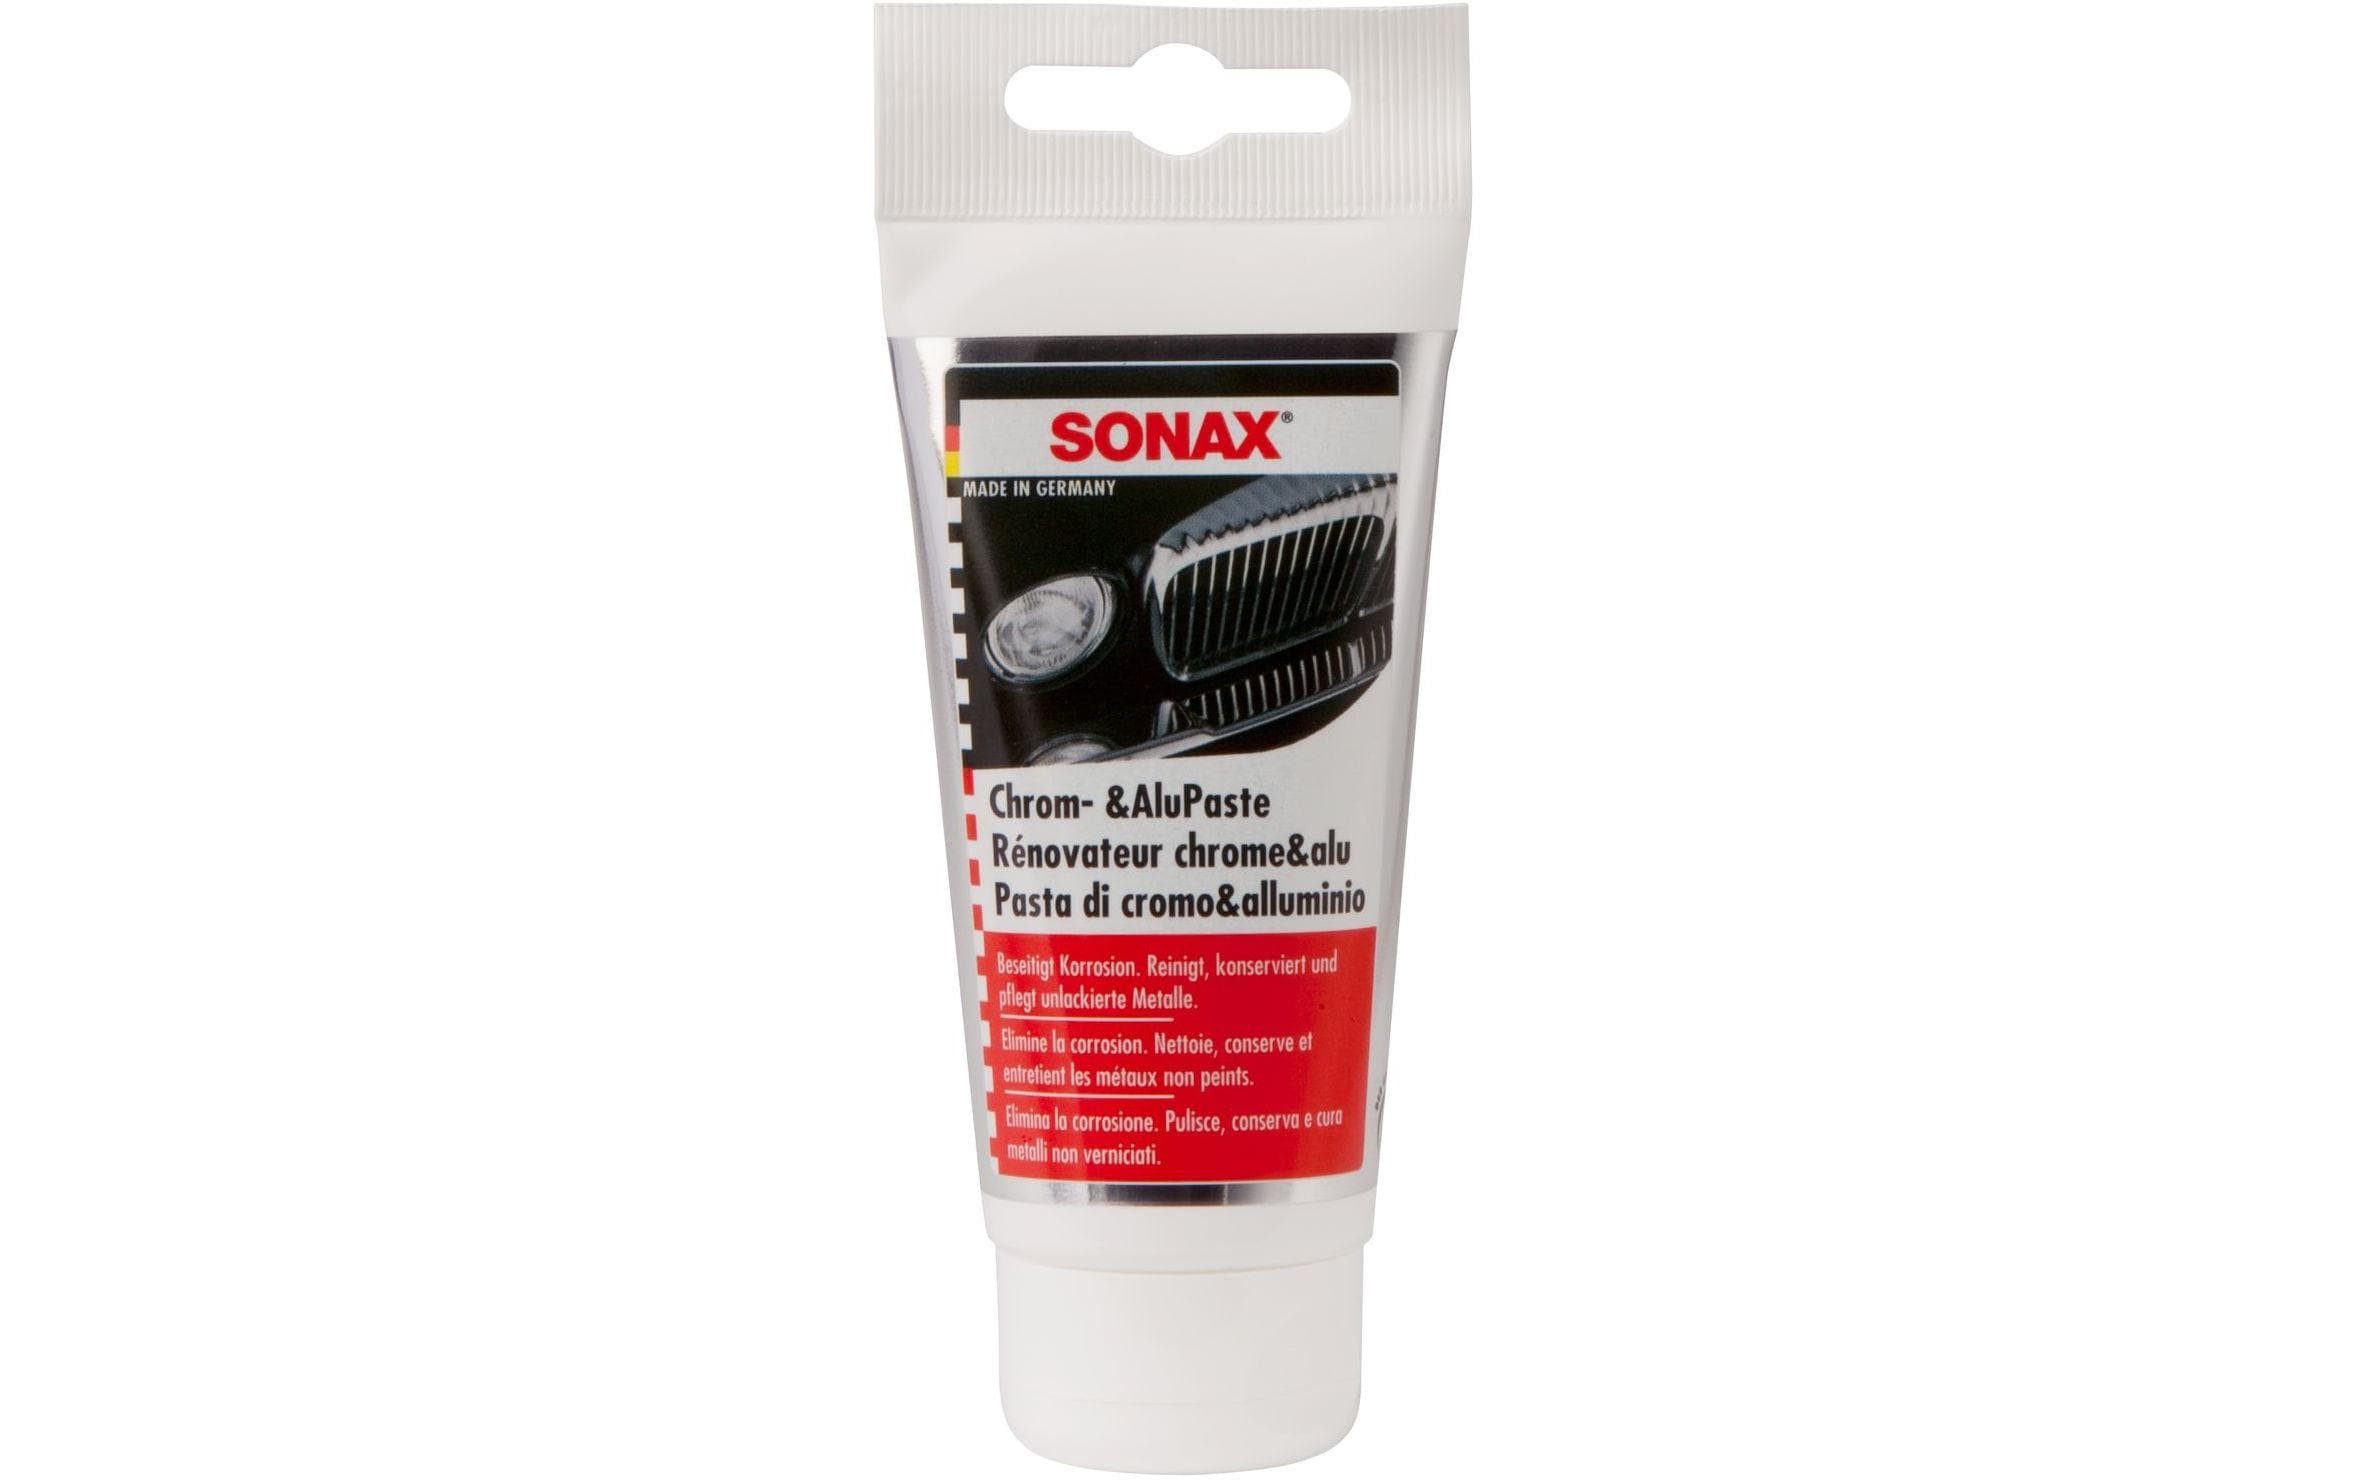 Sonax Metallentroster Chrom- & AluPaste 75 ml